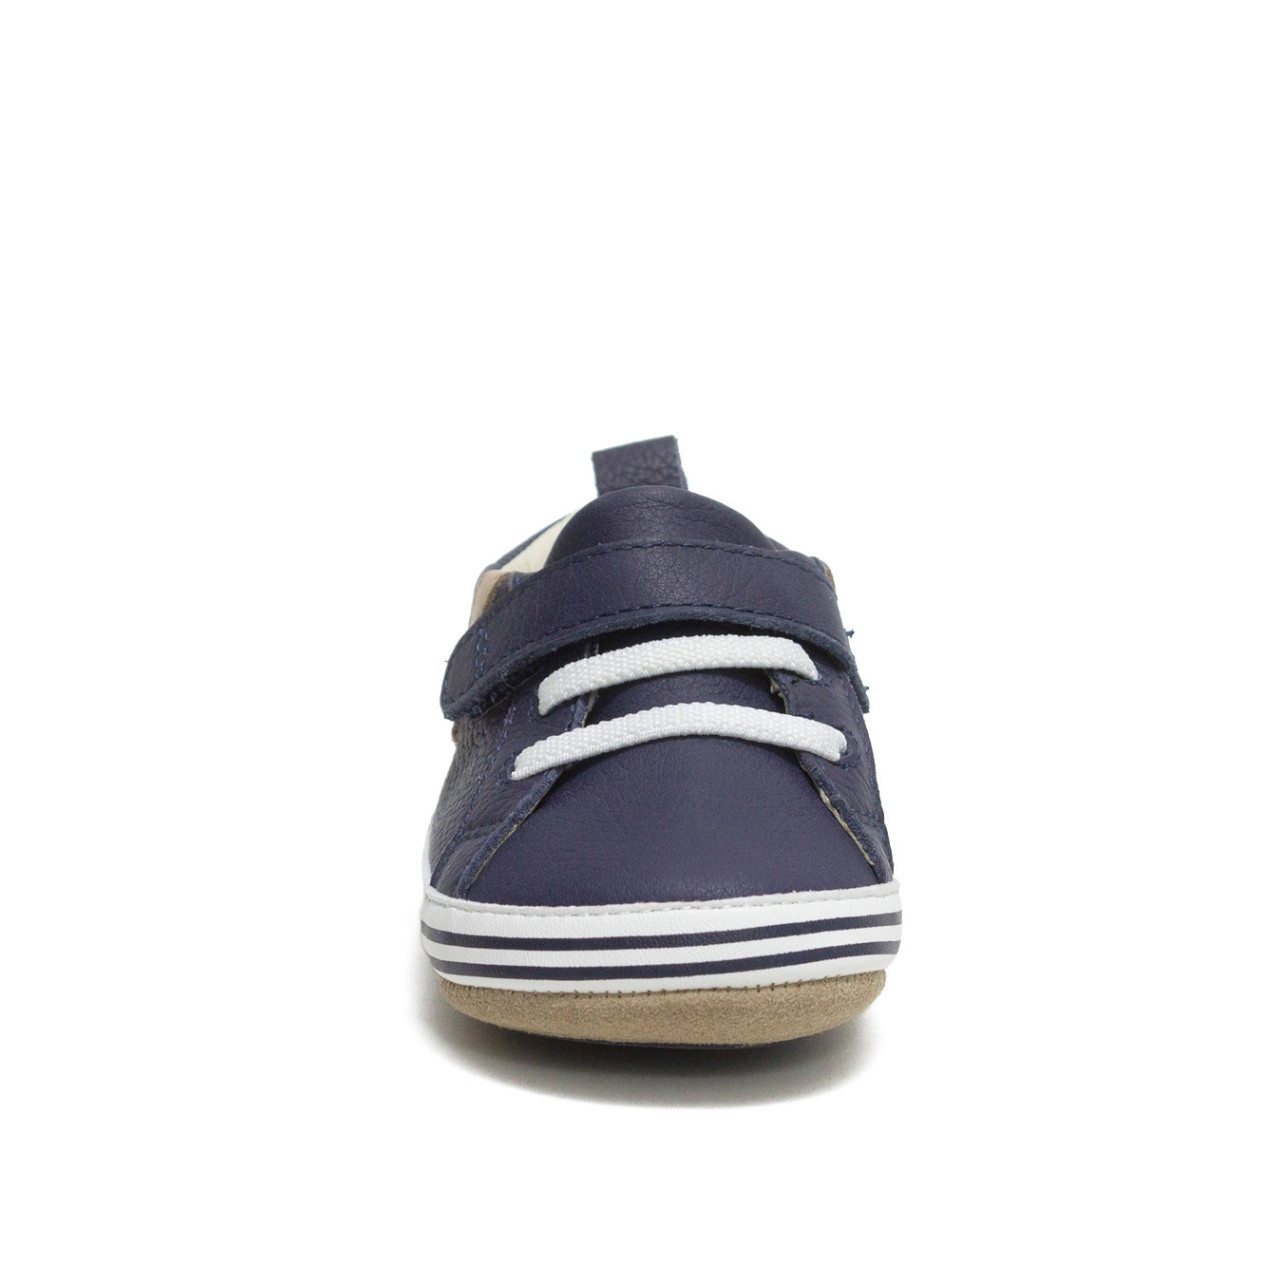 Boys Adam First Kicks Navy Baby Shoes | Robeez